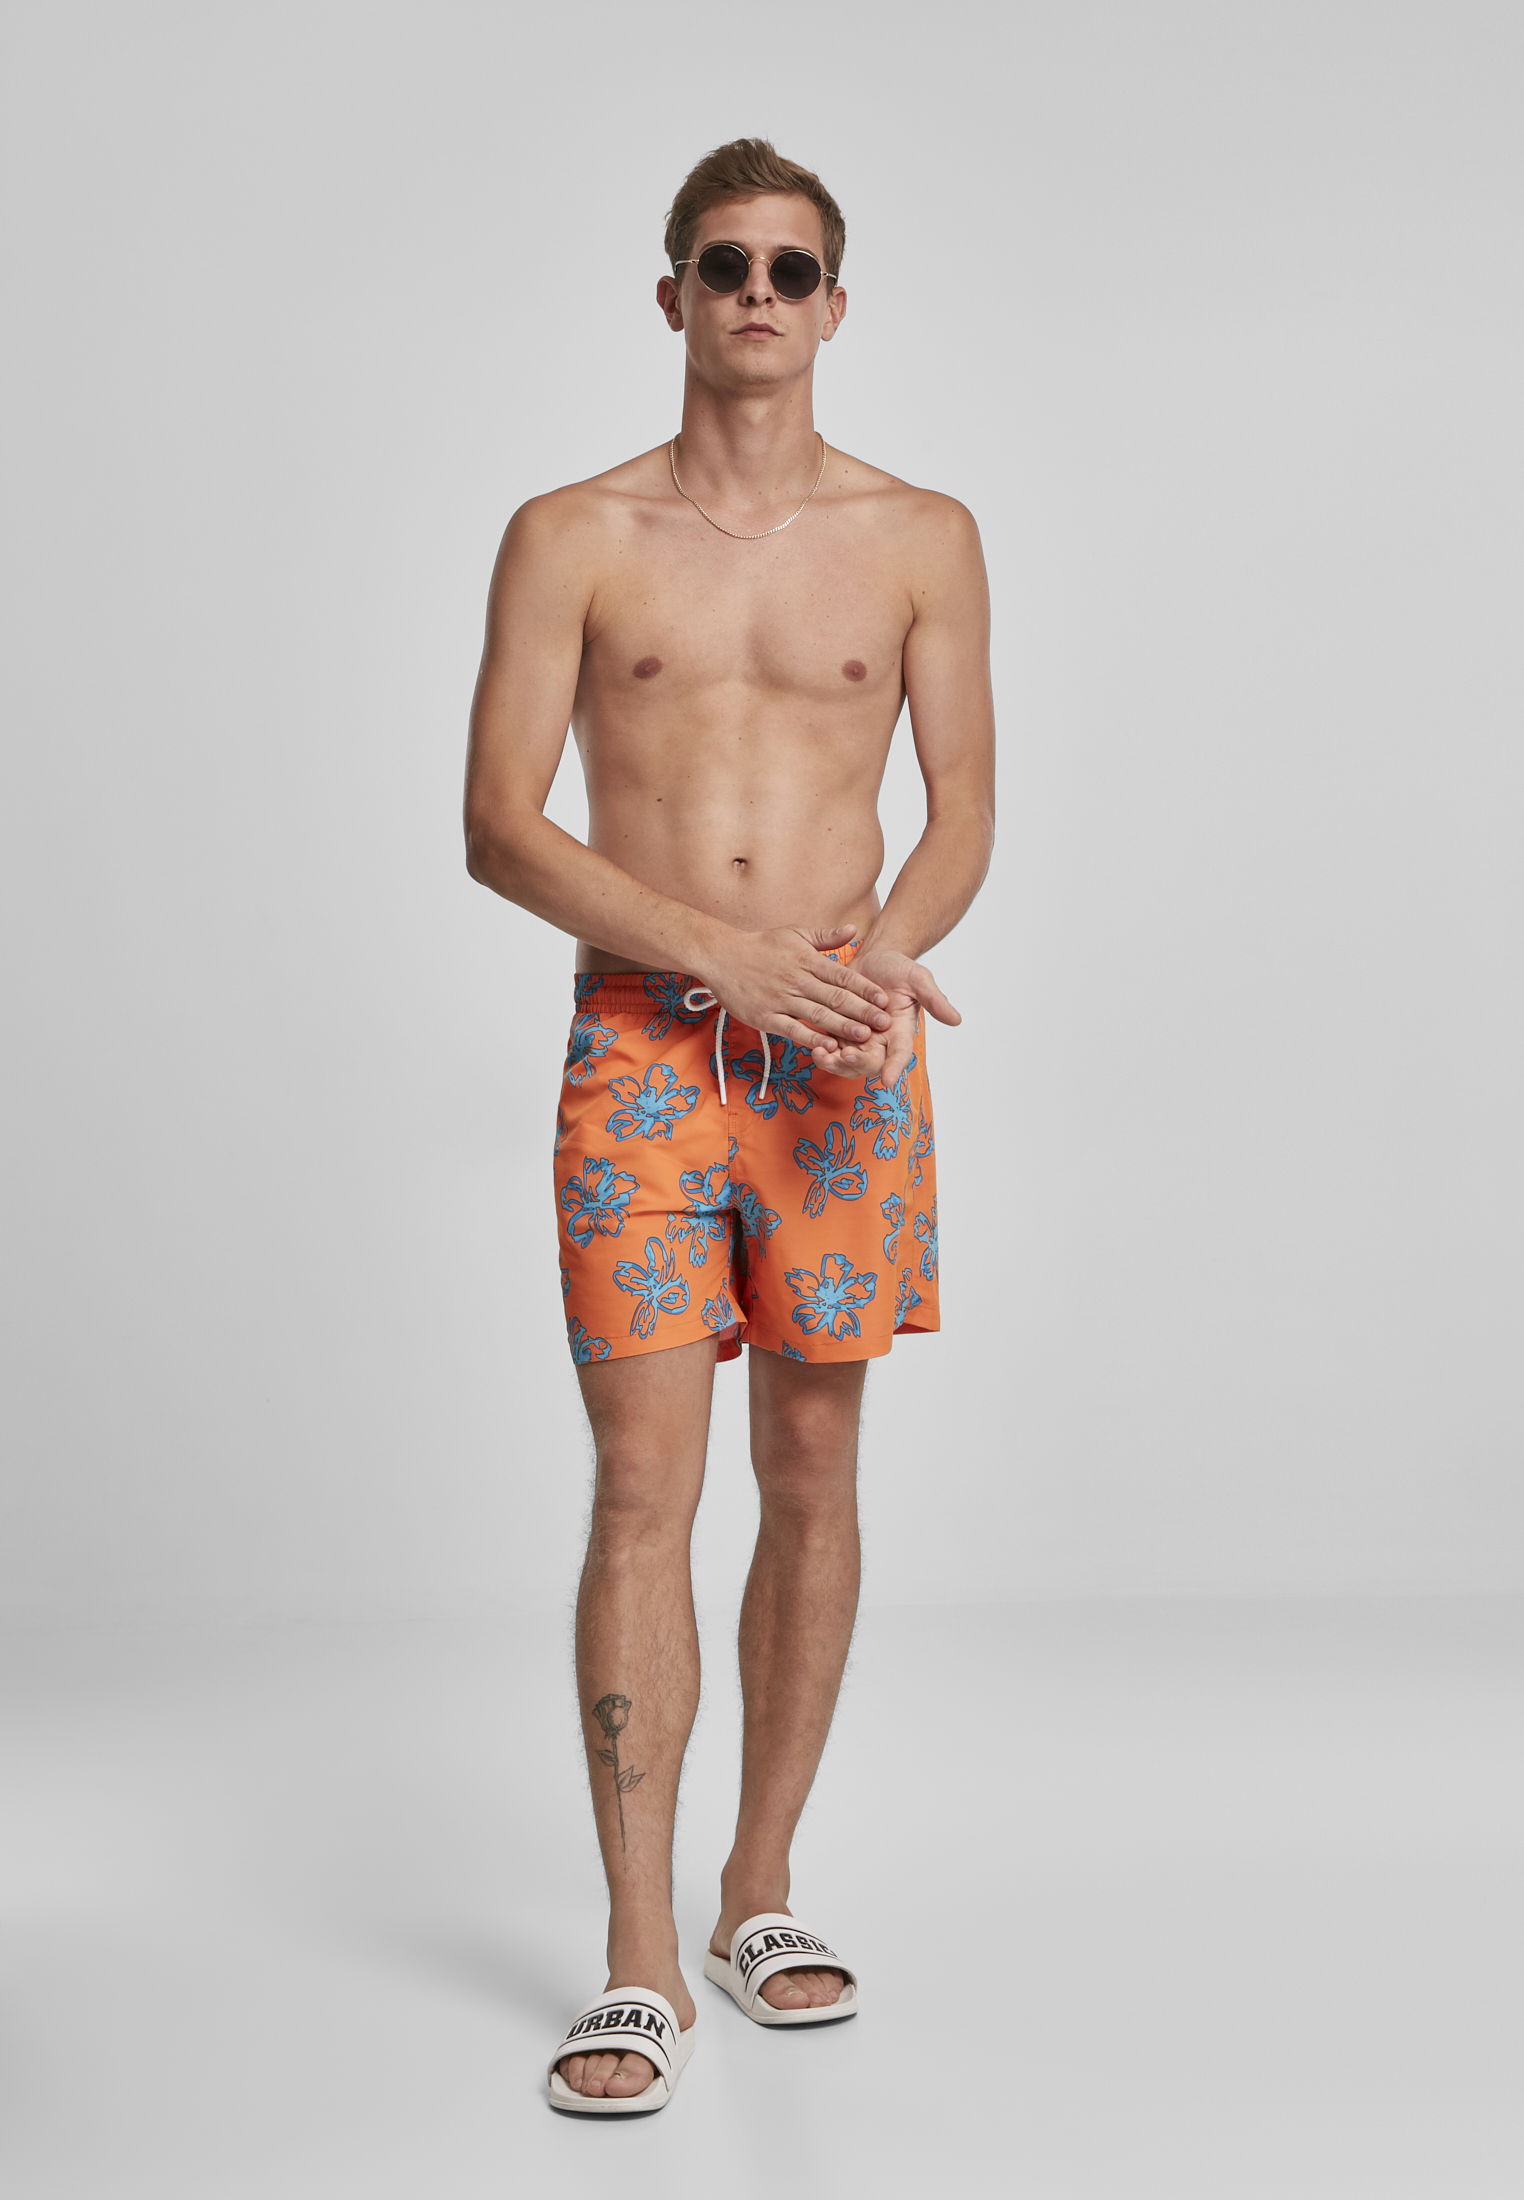 Bademode Floral Swim Shorts in Farbe orange